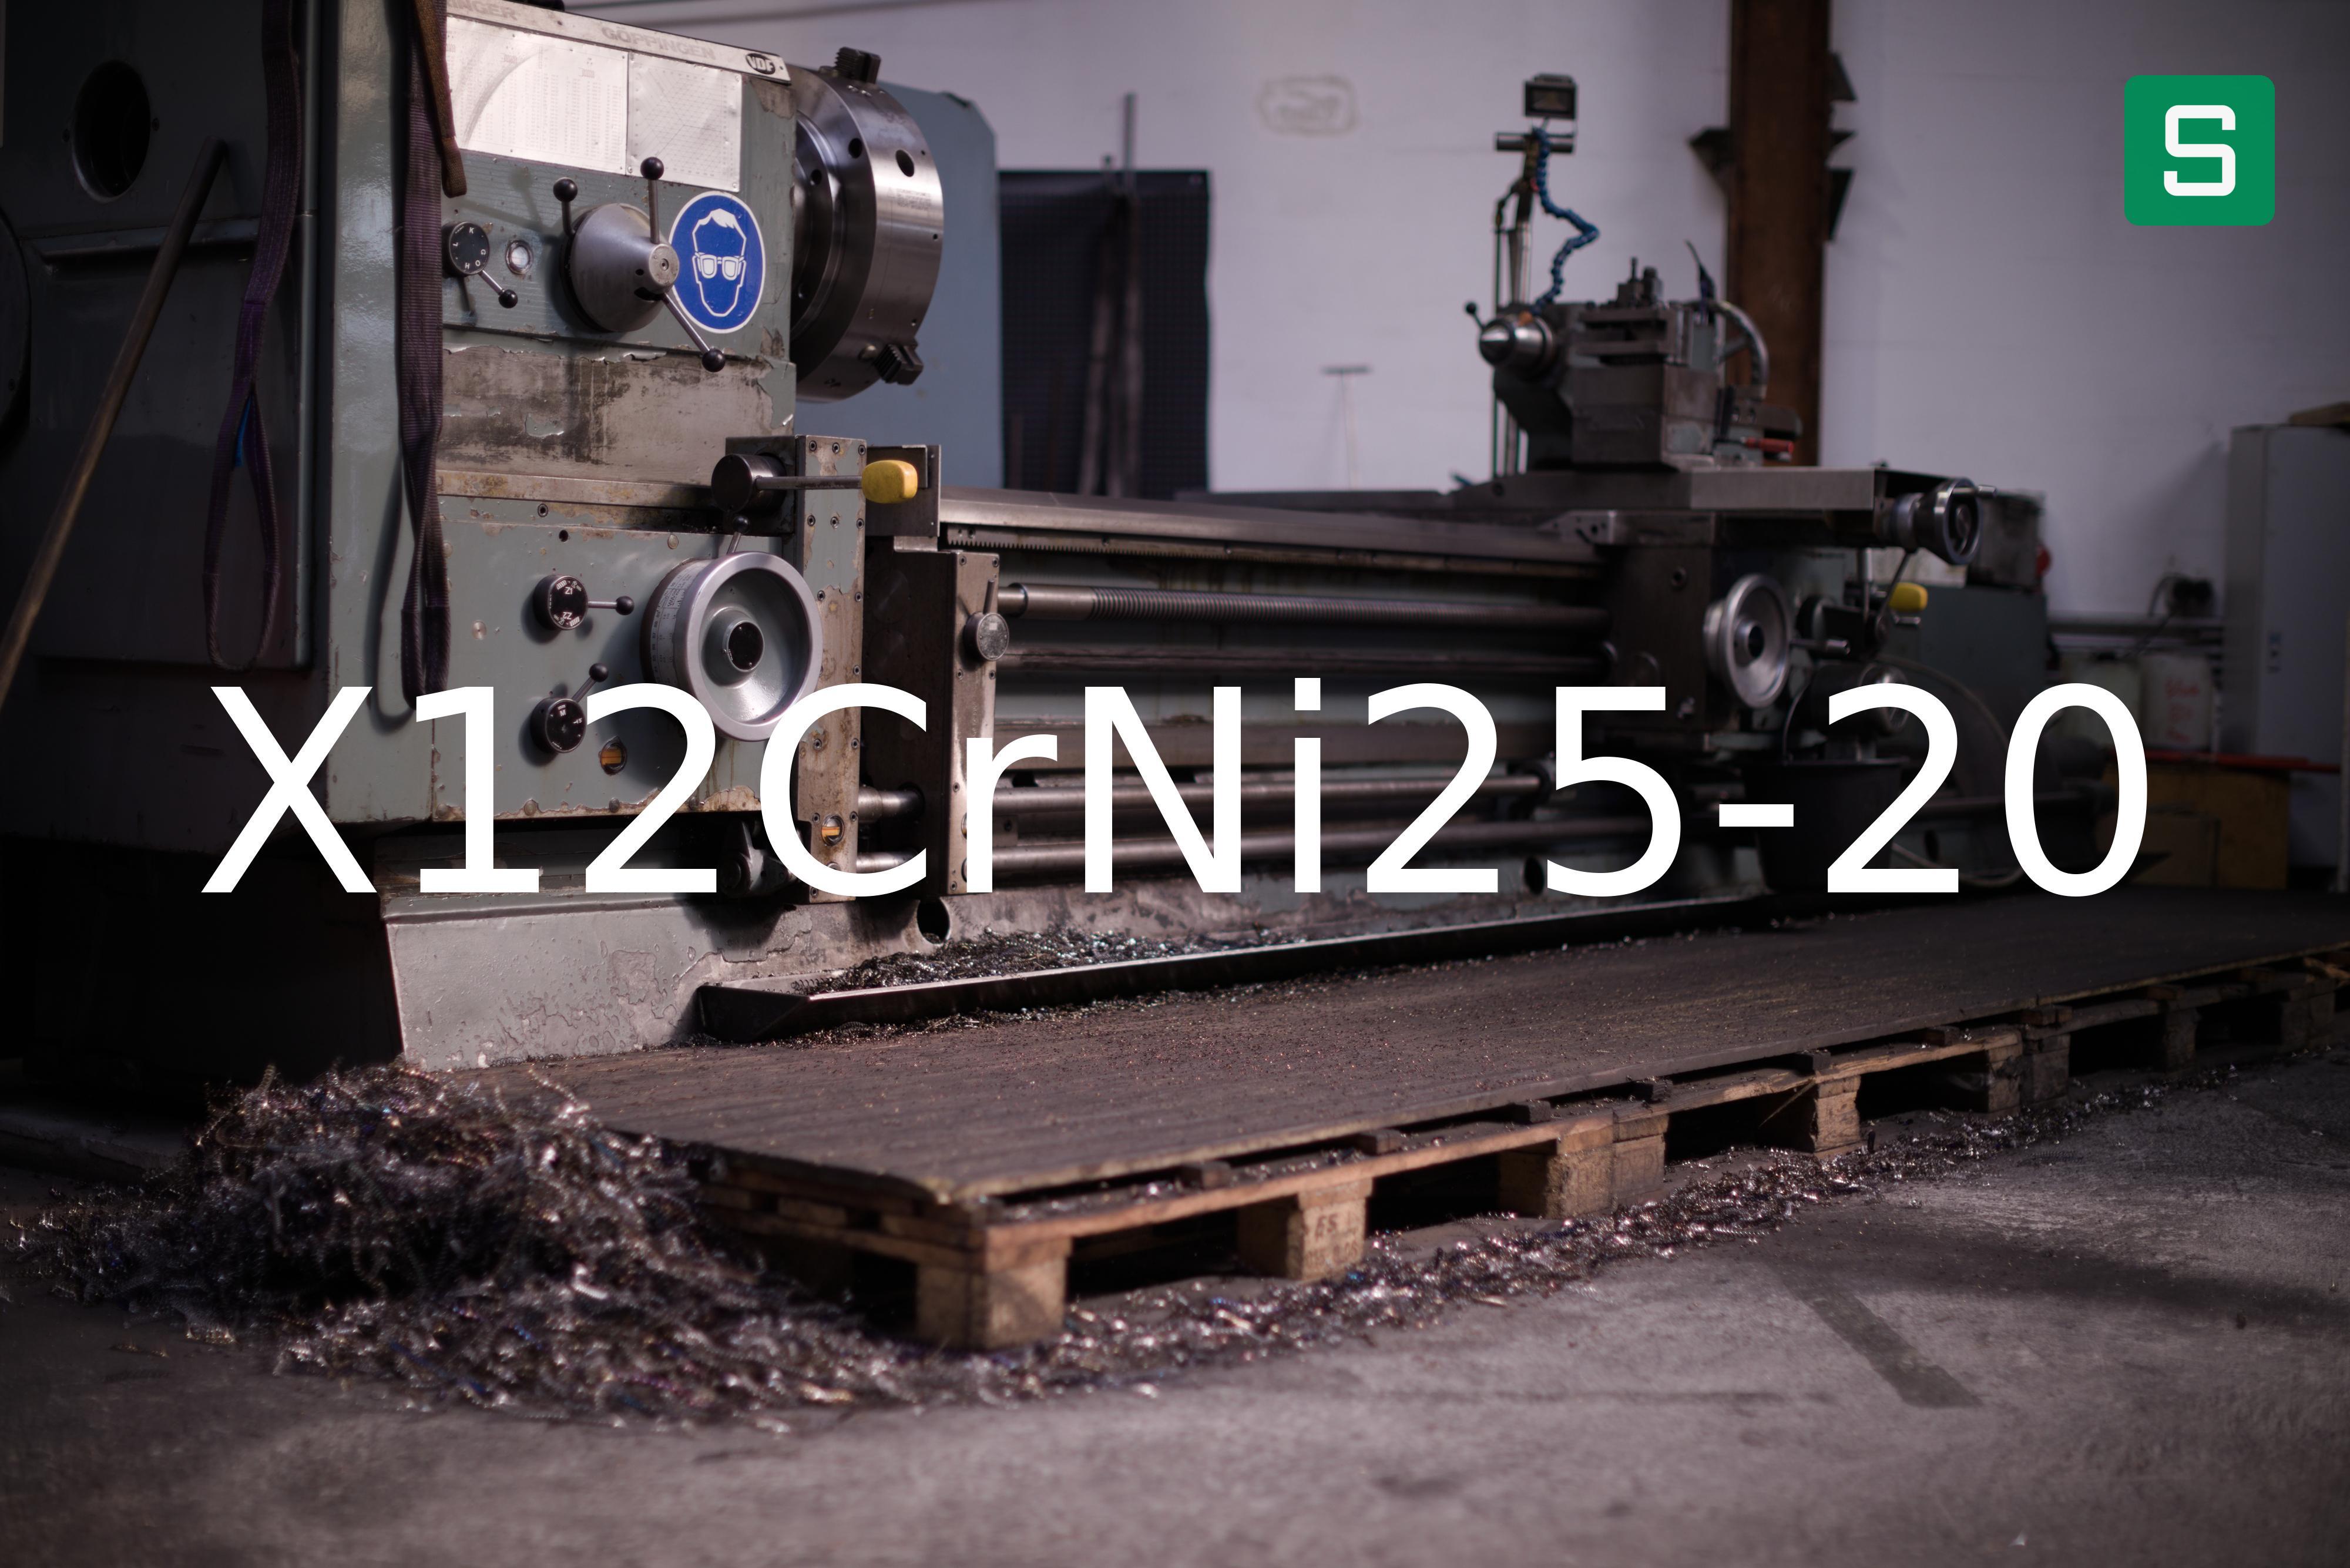 Steel Material: X12CrNi25-20